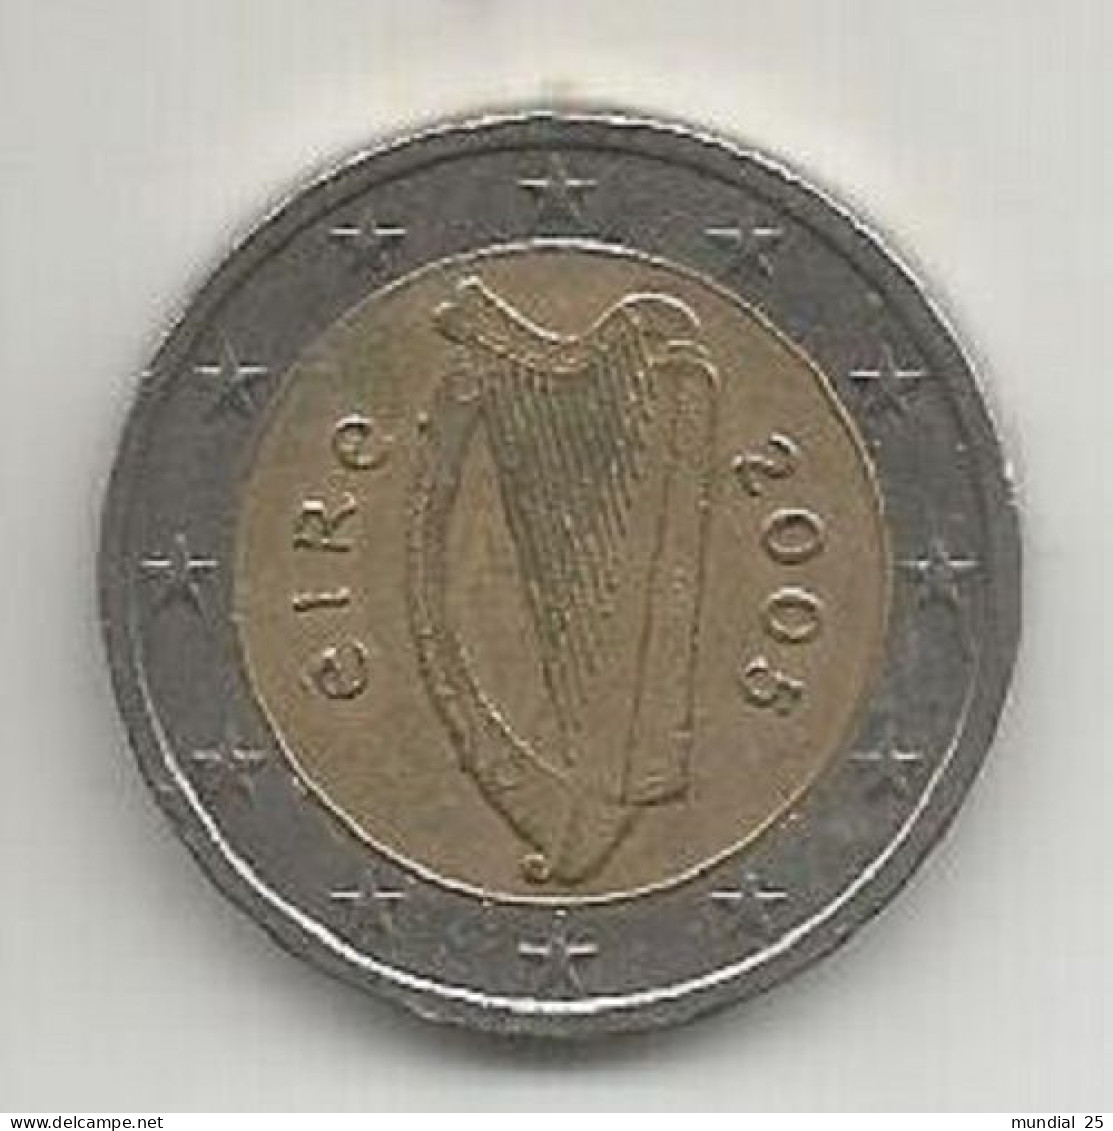 IRELAND 2 EURO 2005 - Irlande